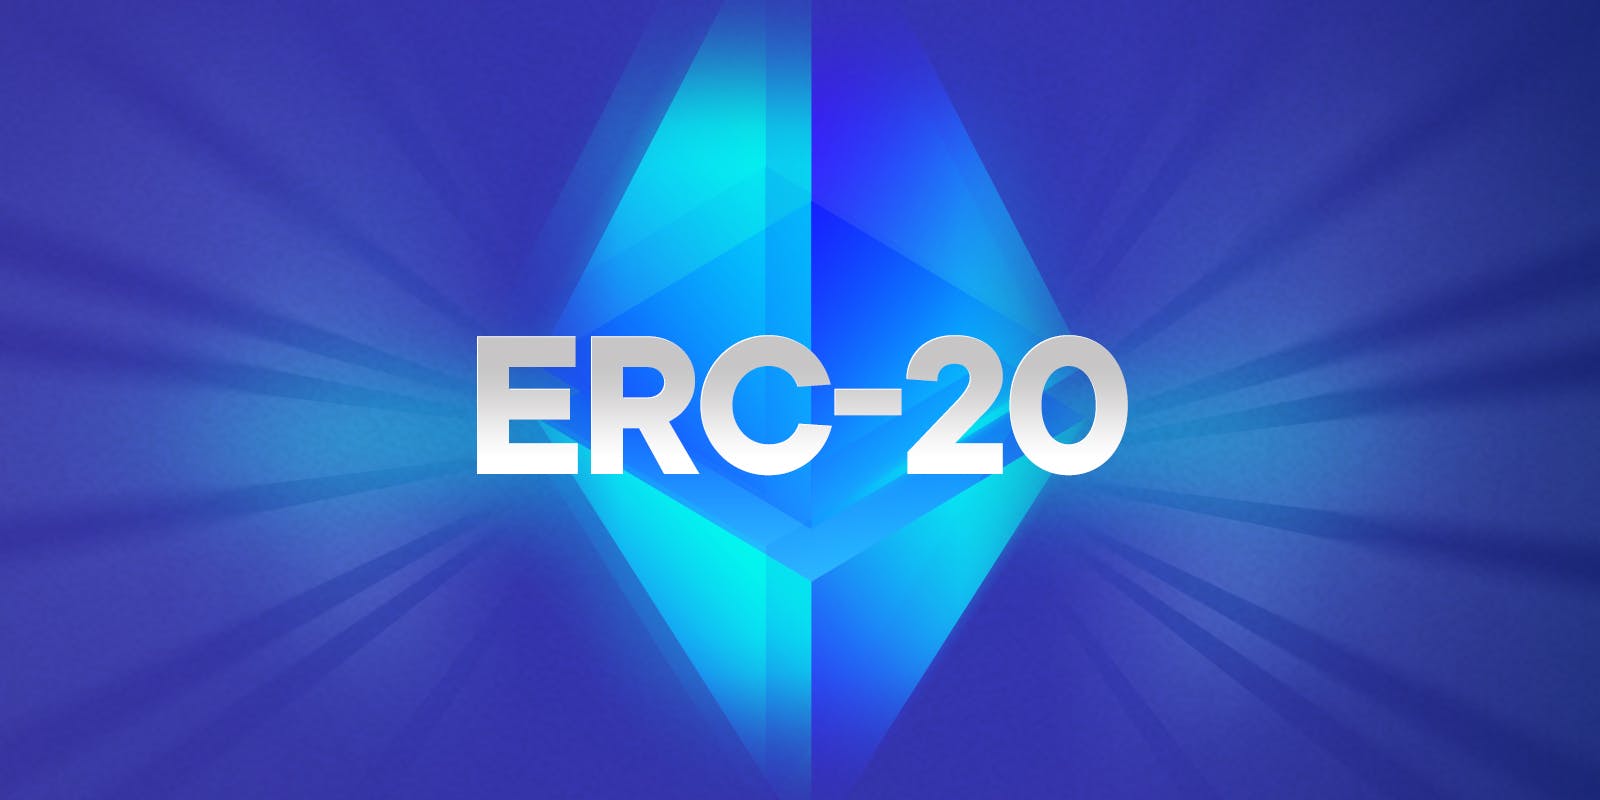 erc-20-tokens-main